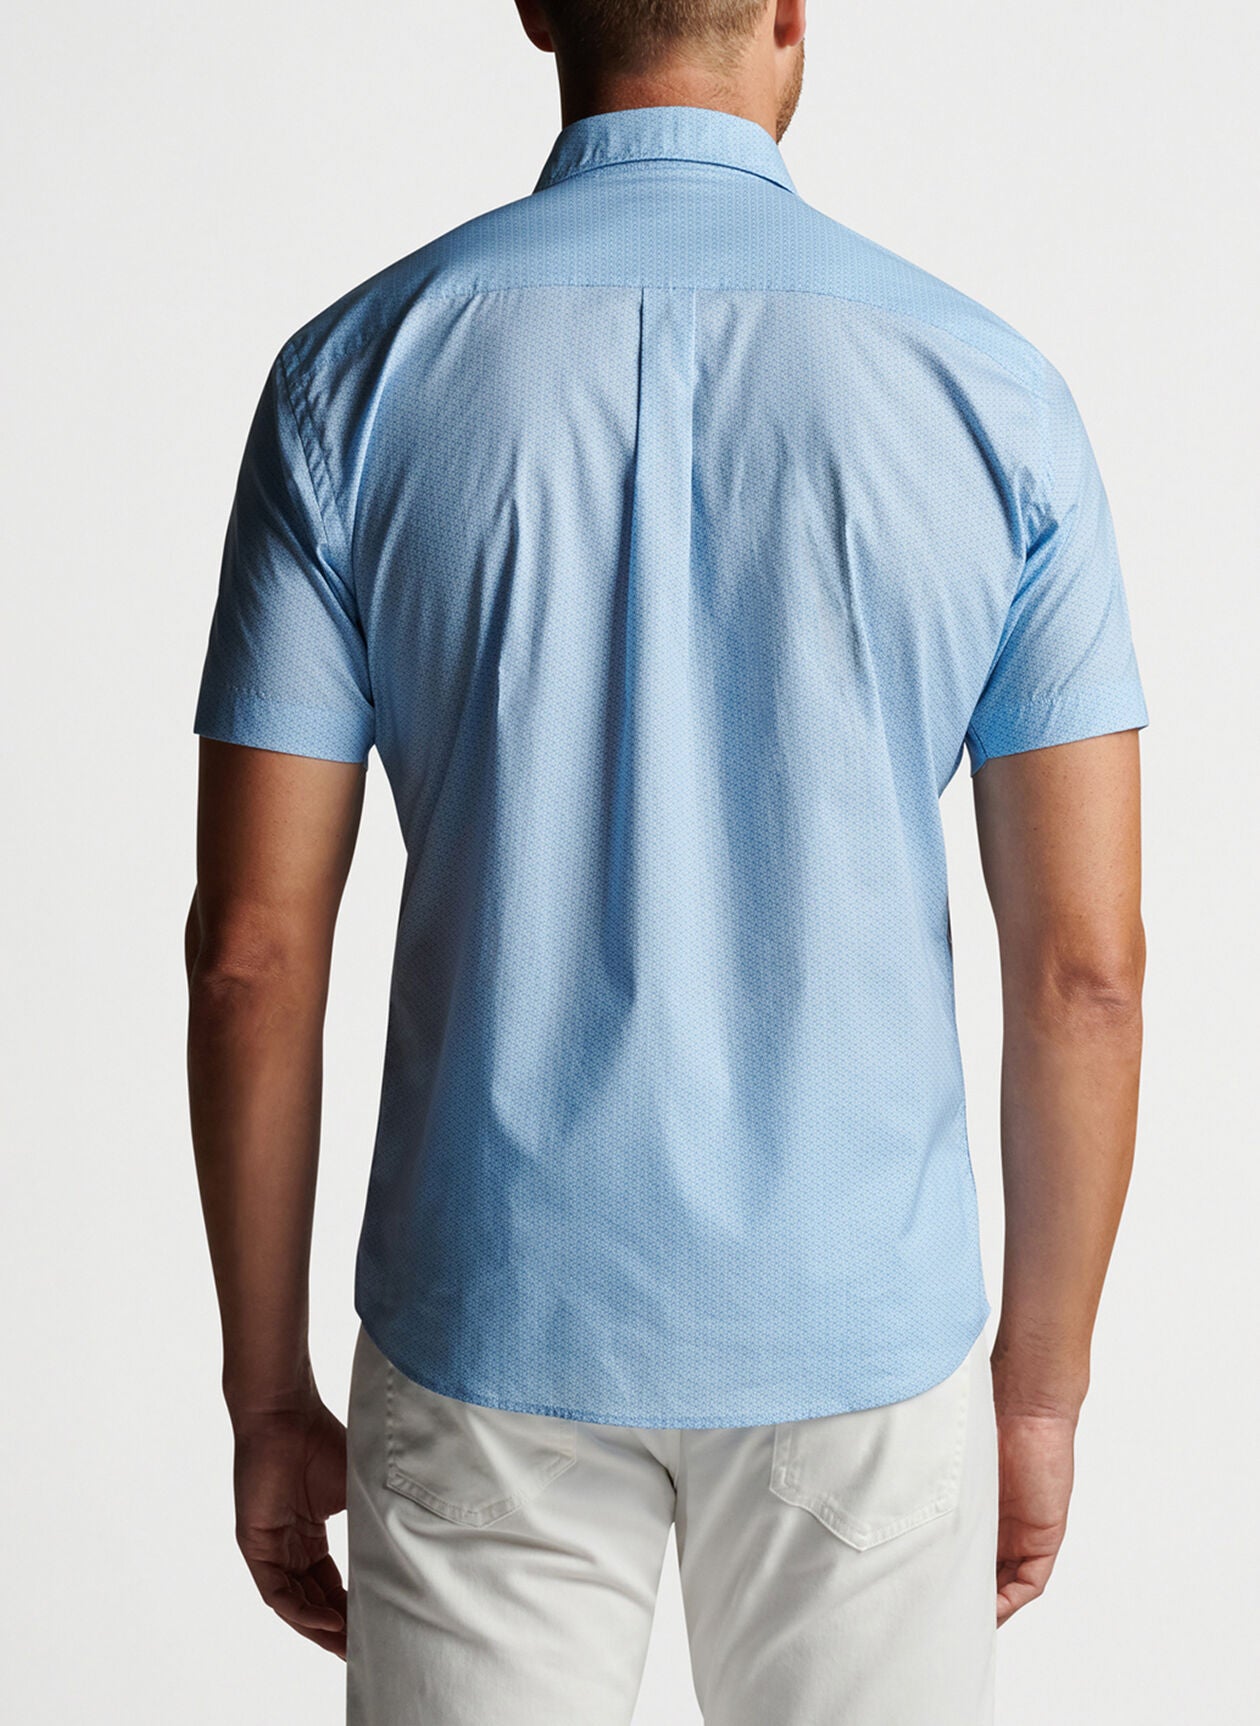 Peter Millar Olivet Short Sleeve Cotton Sport Shirt